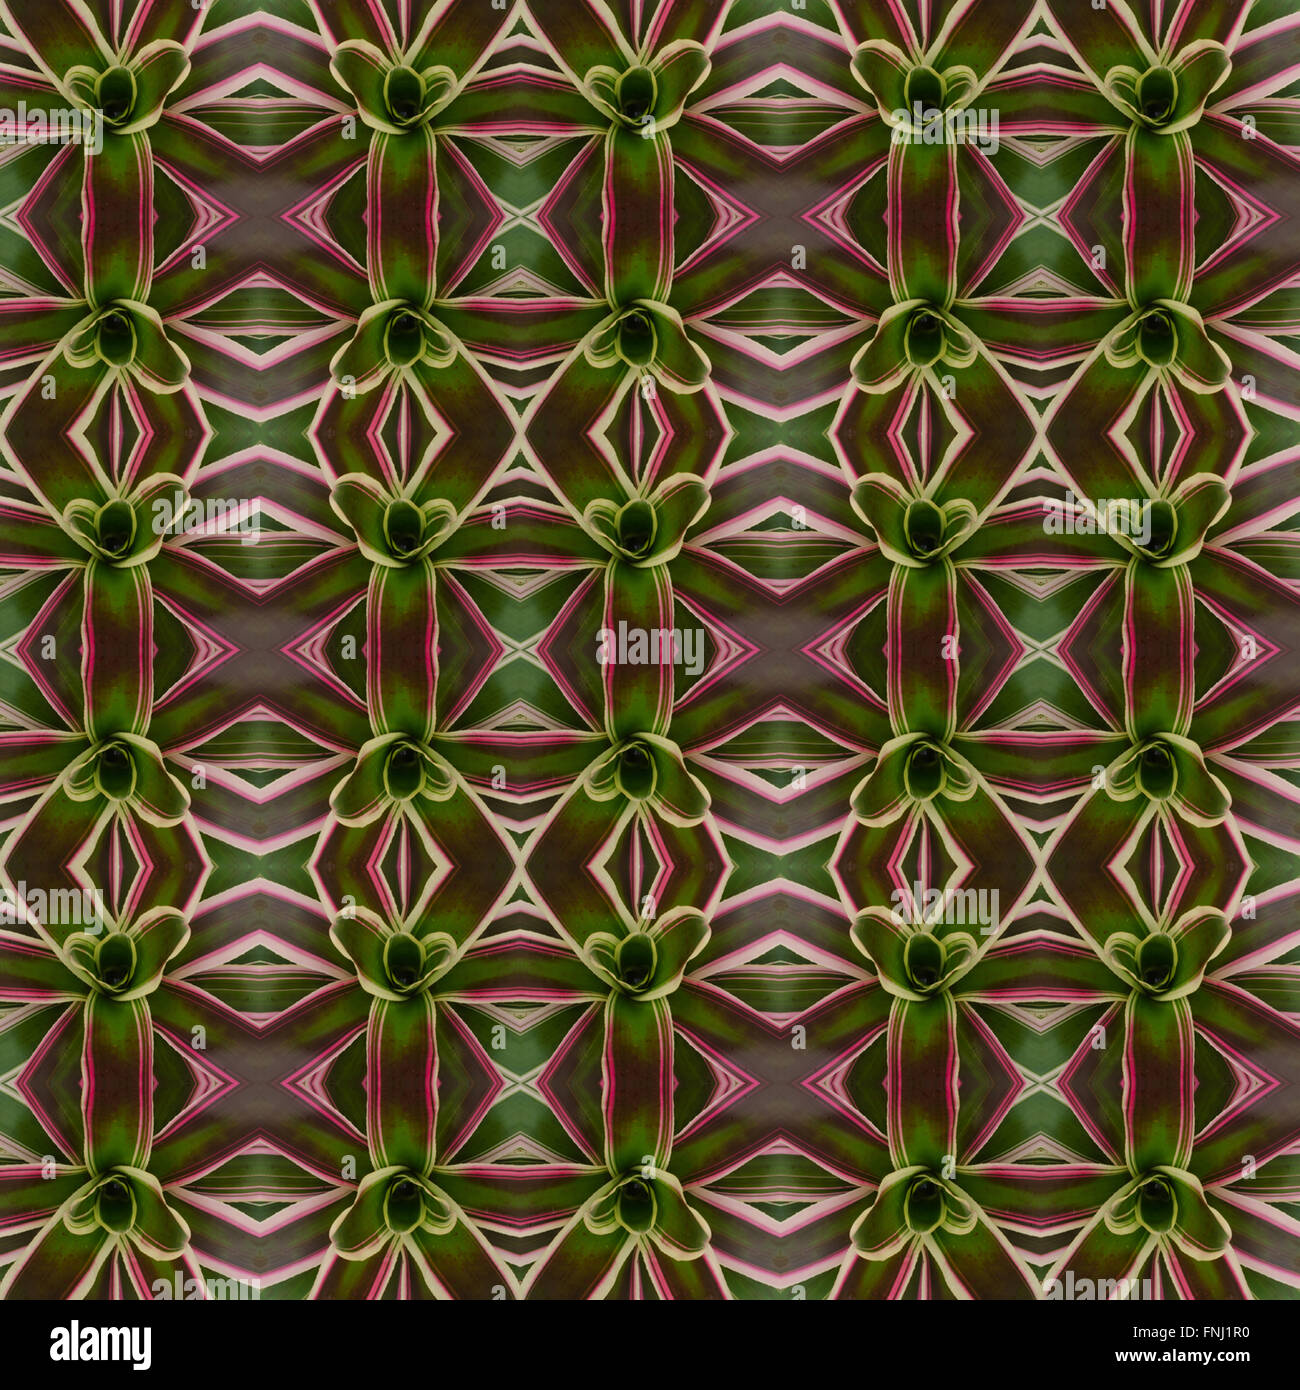 bromeliad seamless pattern background Stock Photo